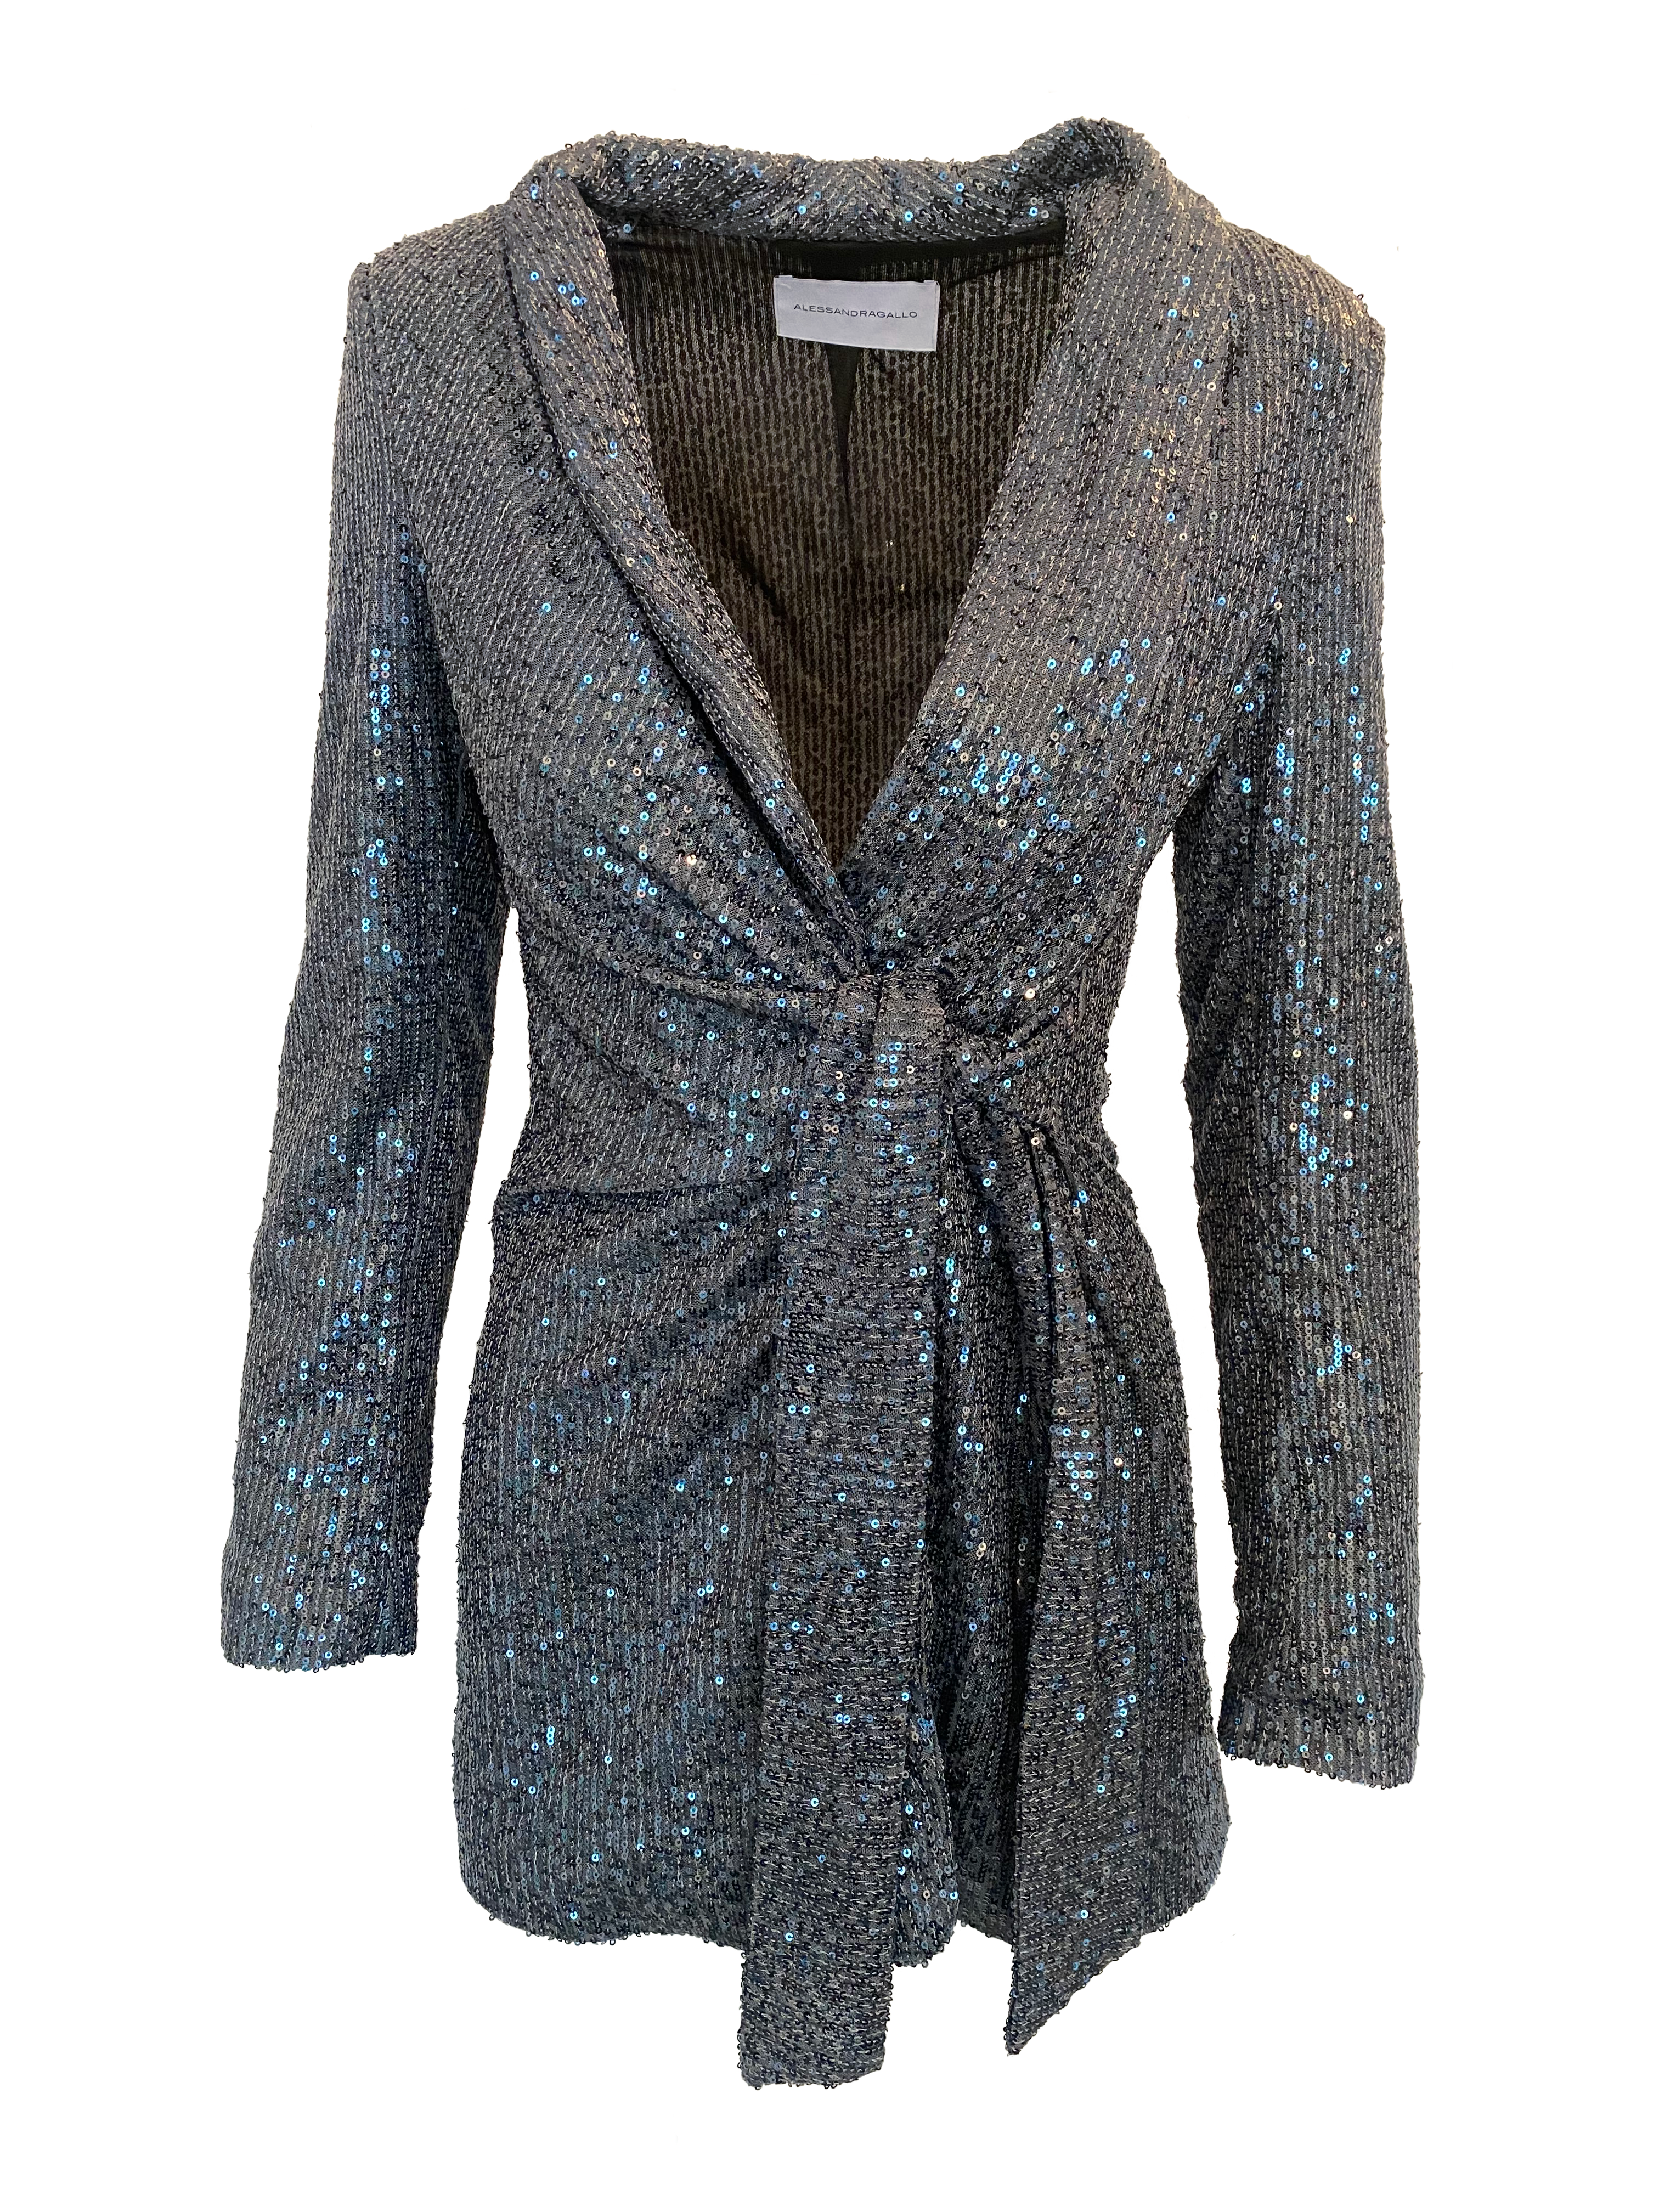 MEROPE - wallet jacket in light blue sequins